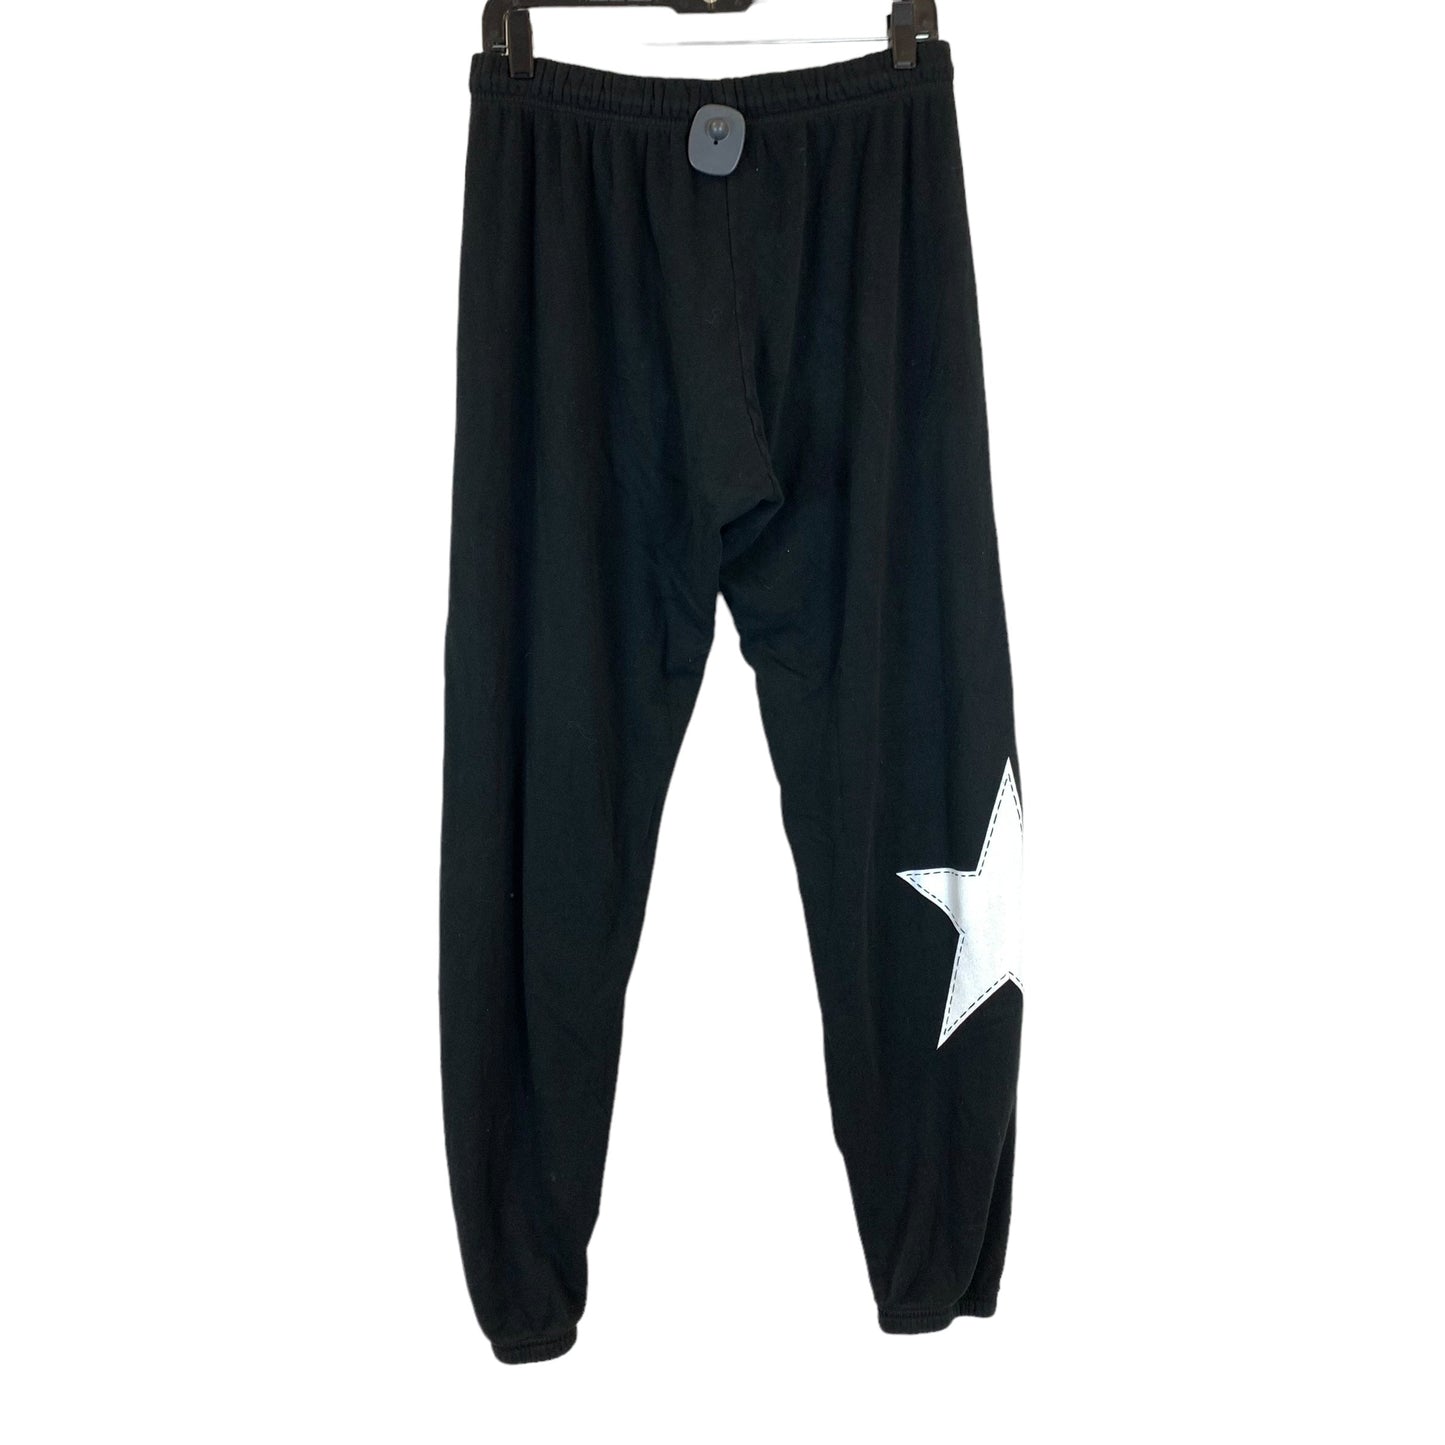 Athletic Pants By LAUREN MOSHI  Size: S